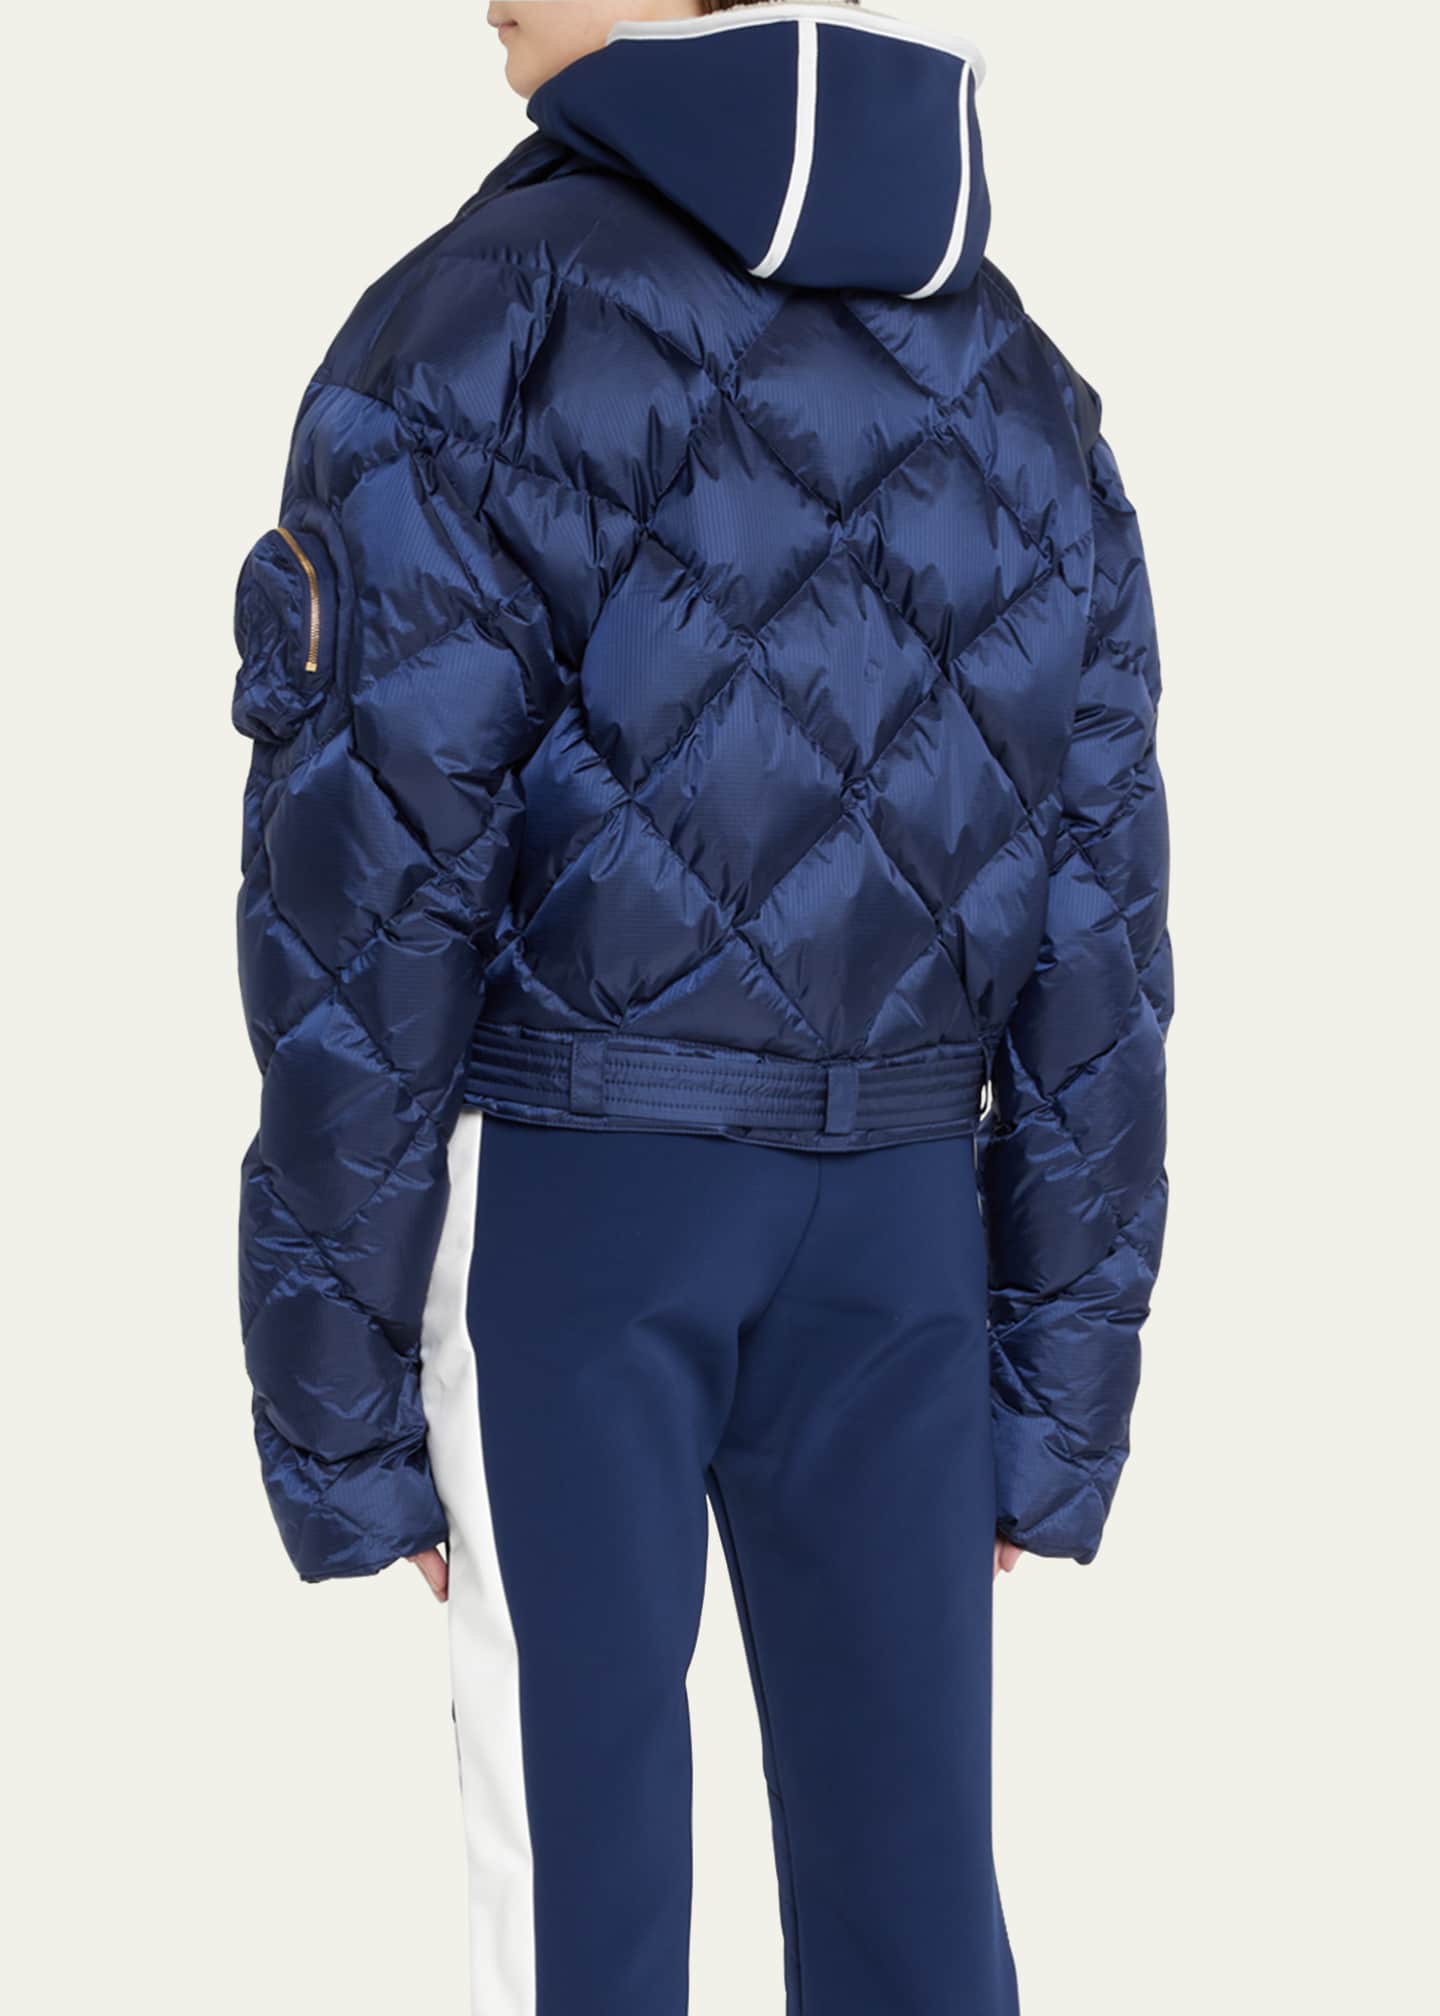 Bogner Nuala Ski Suit w/ Puffer Coat - Bergdorf Goodman